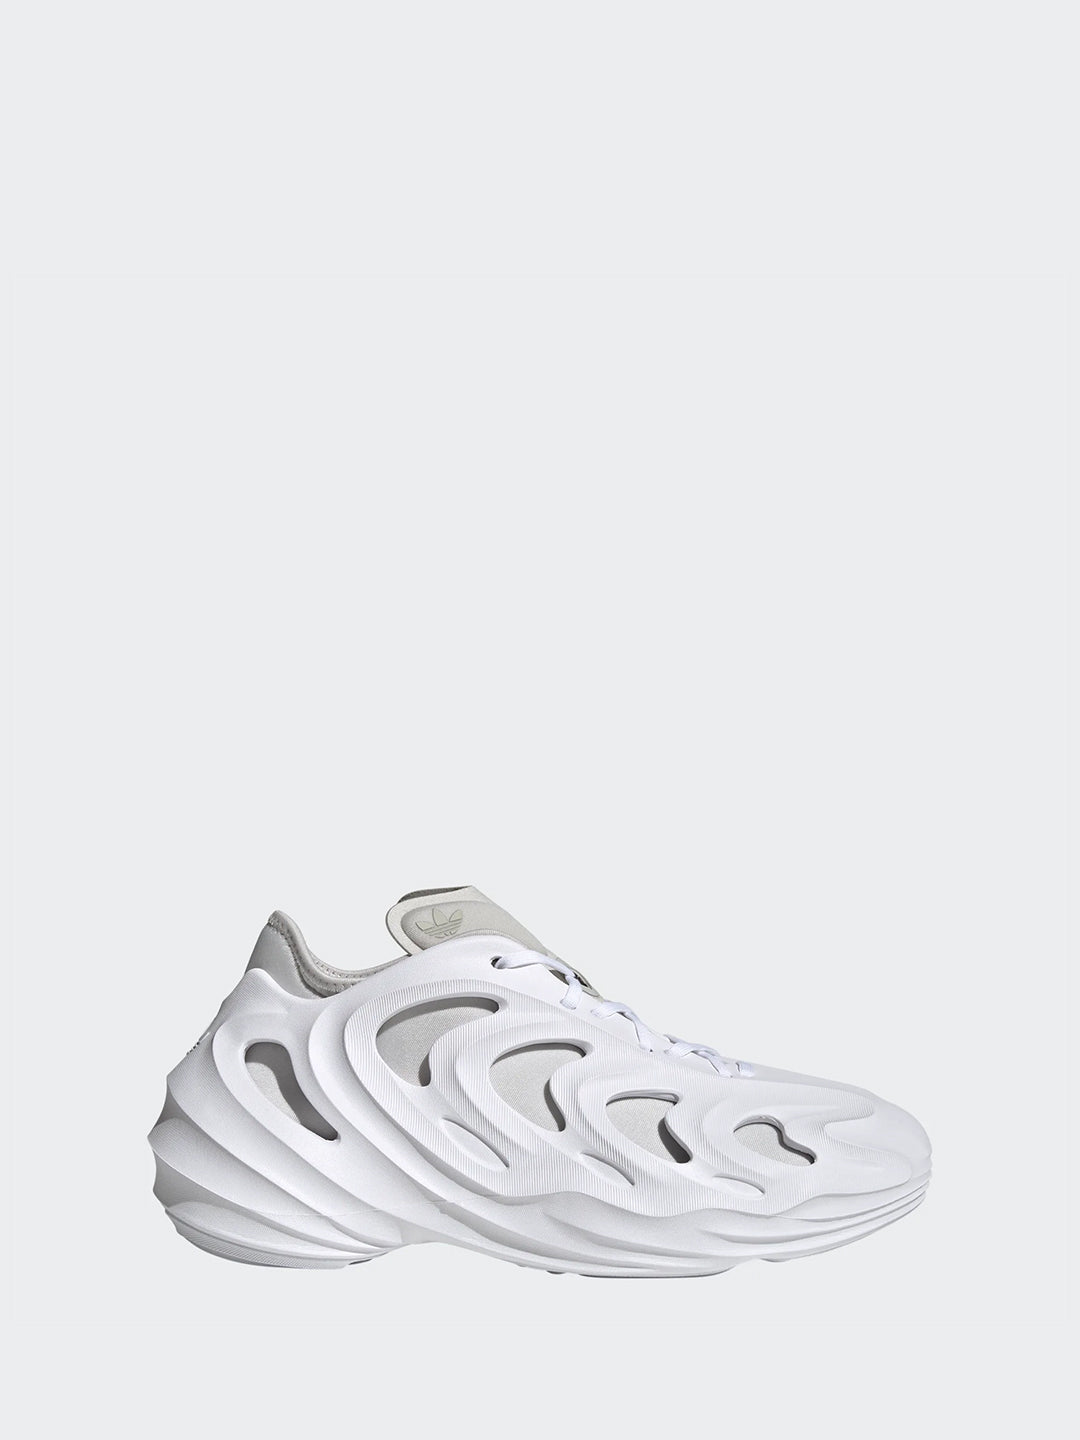 Adidas Adifom Q low white sneakers